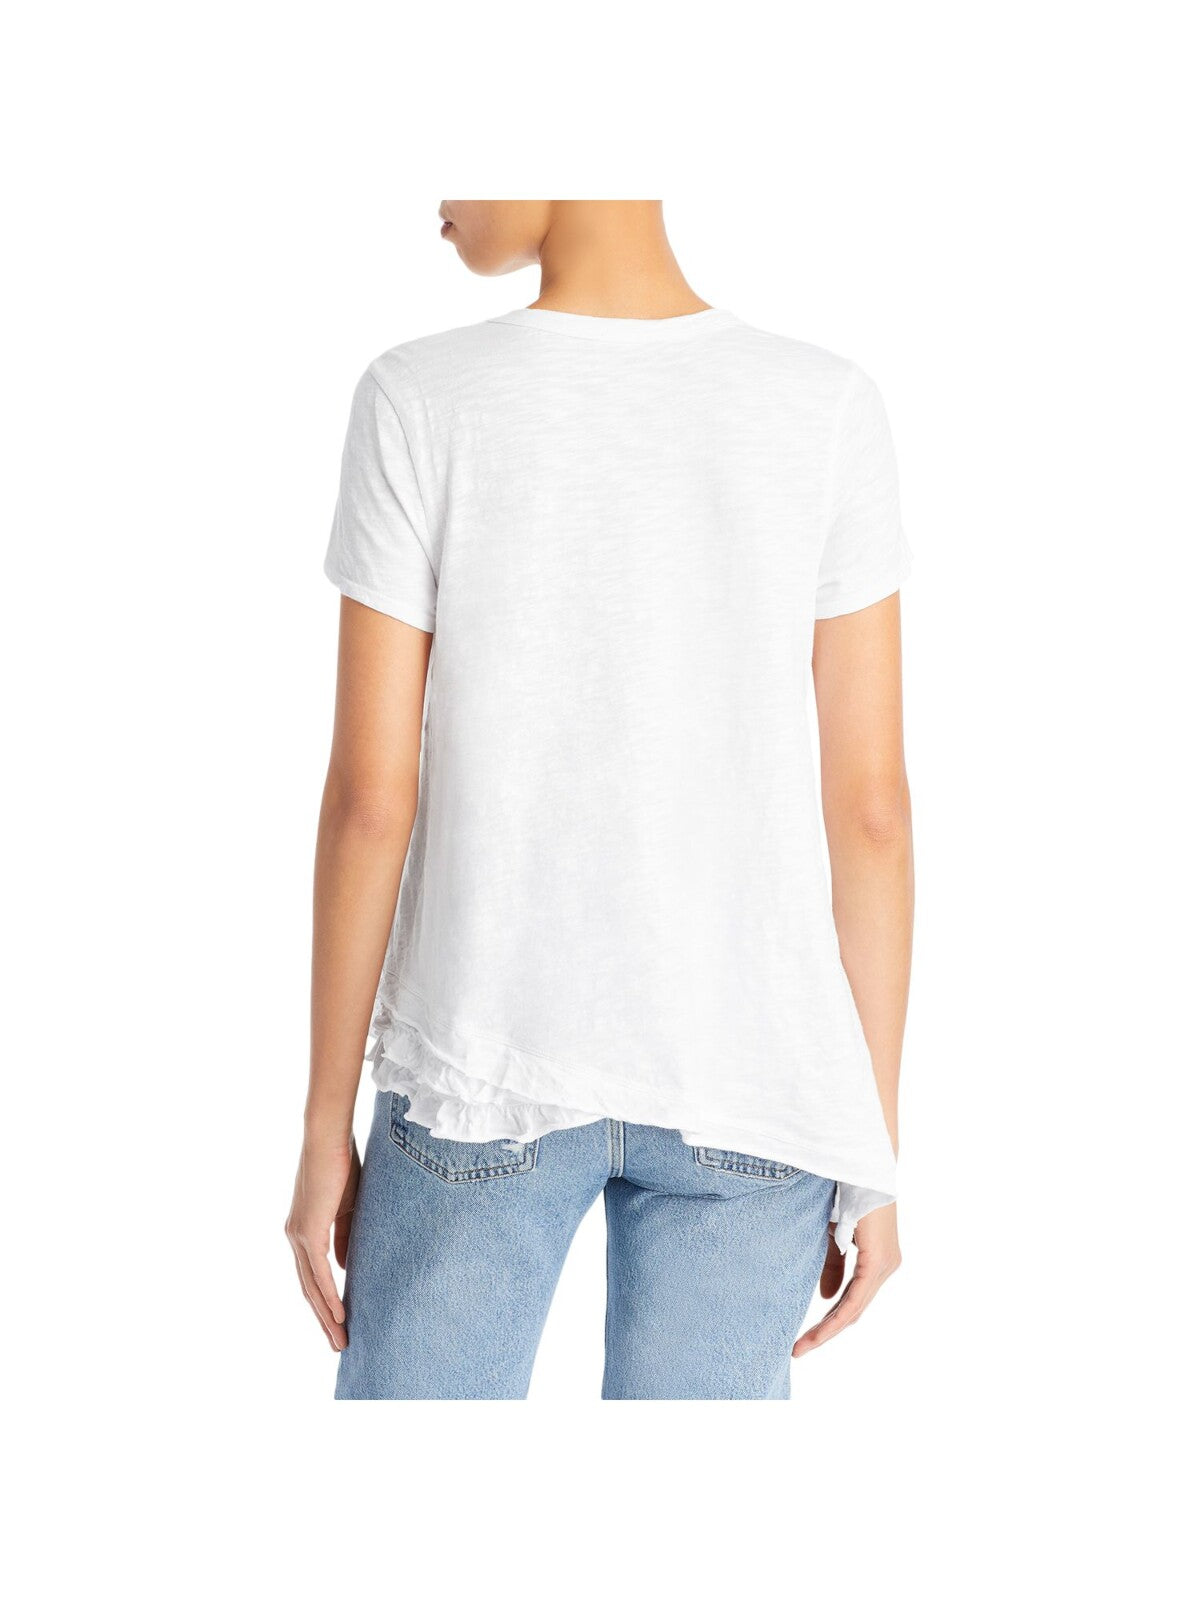 WILT Womens White Short Sleeve Crew Neck T-Shirt XS